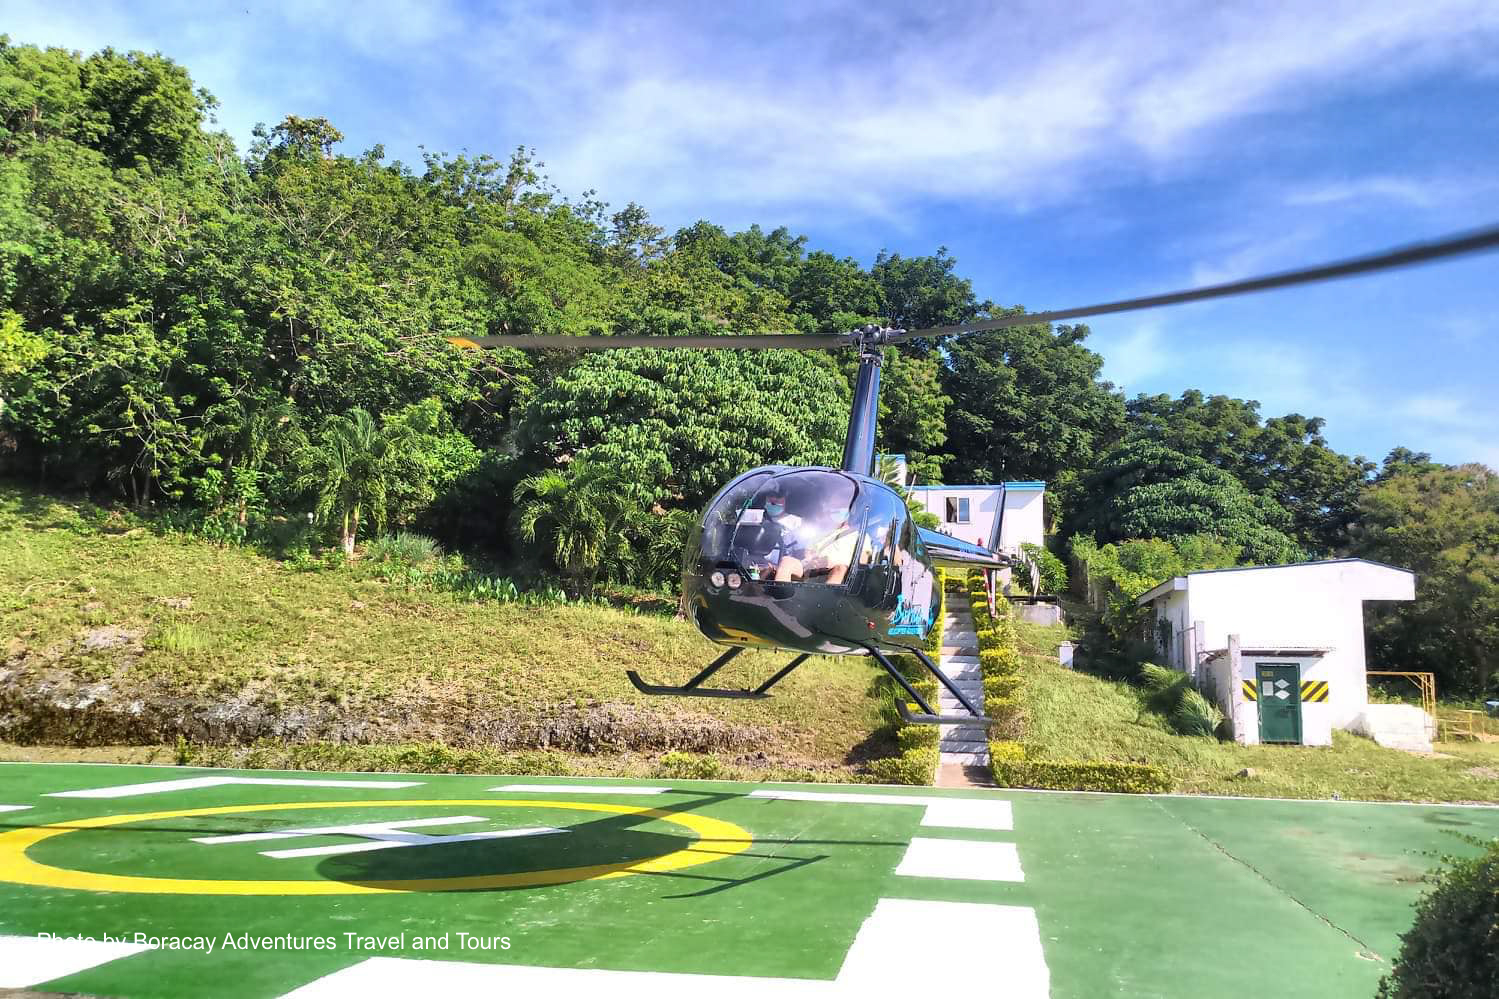 Enjoy the Helicopter tour of Boracay Island